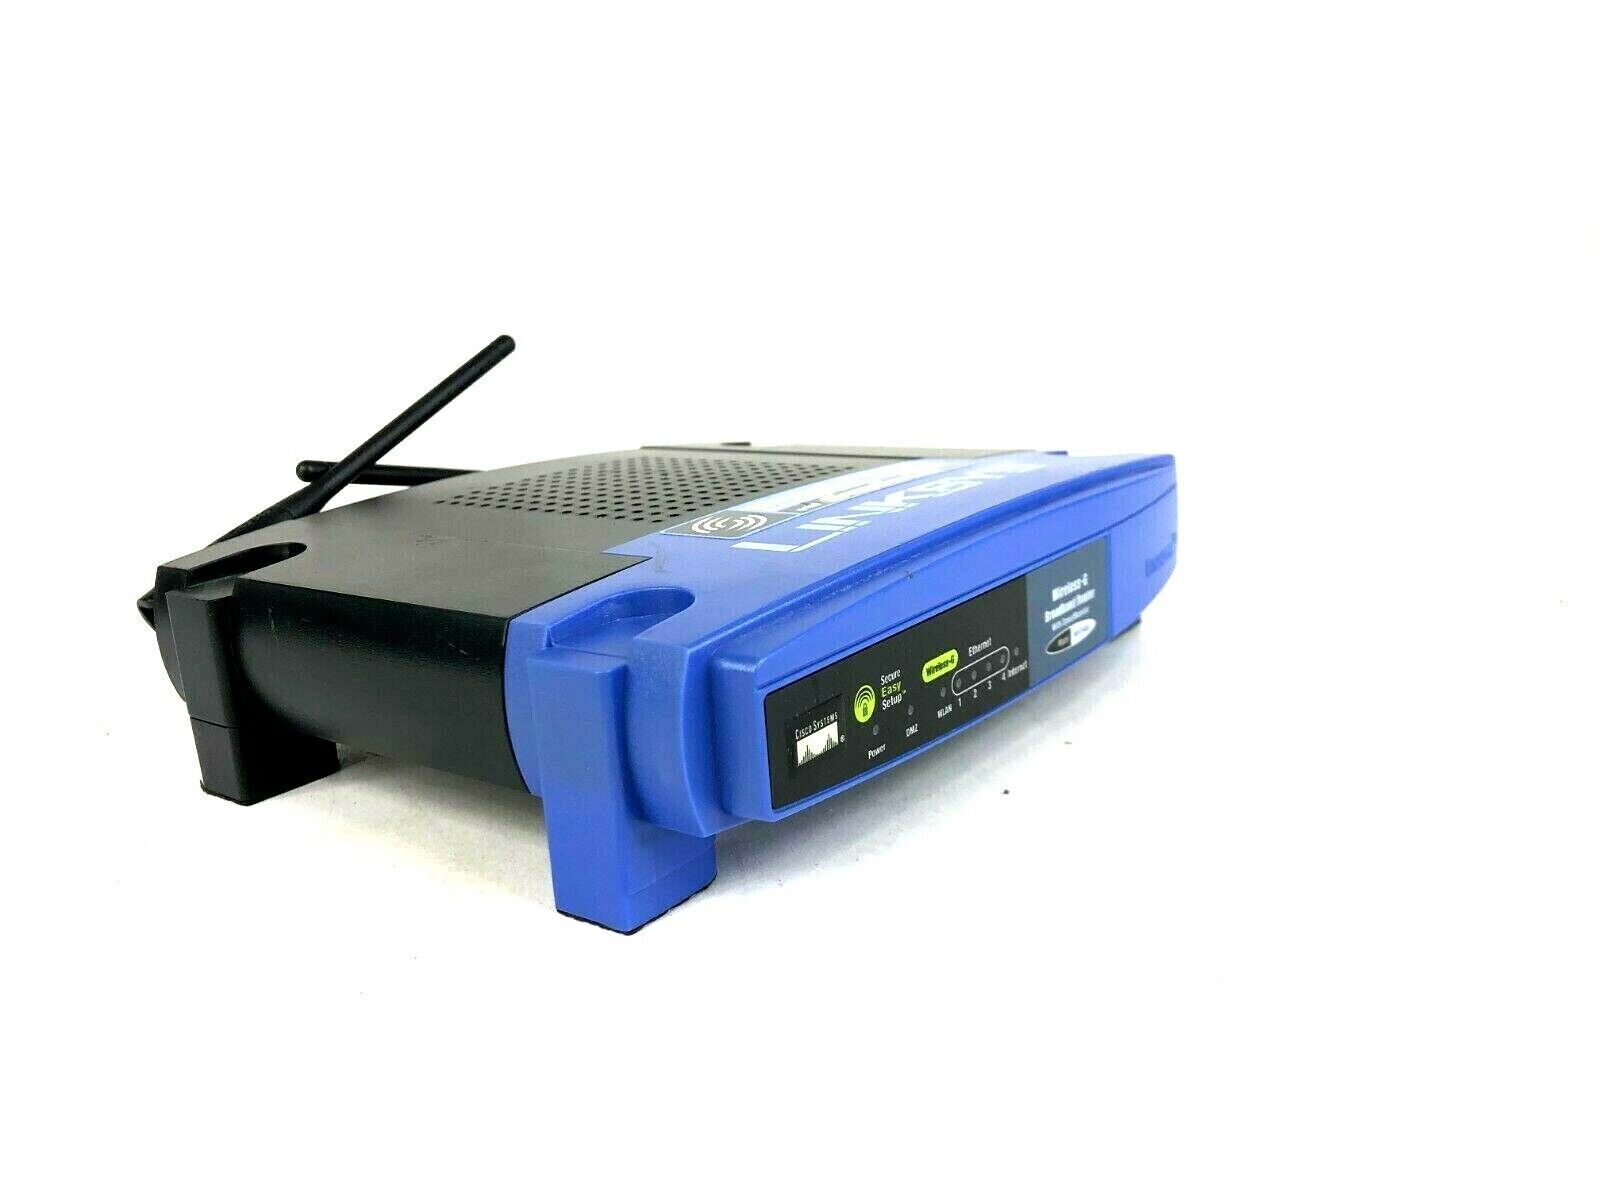 Linksys Wireless-g 2.4 Ghz Broadband Router Speed Booster model WRT54GS V7.2